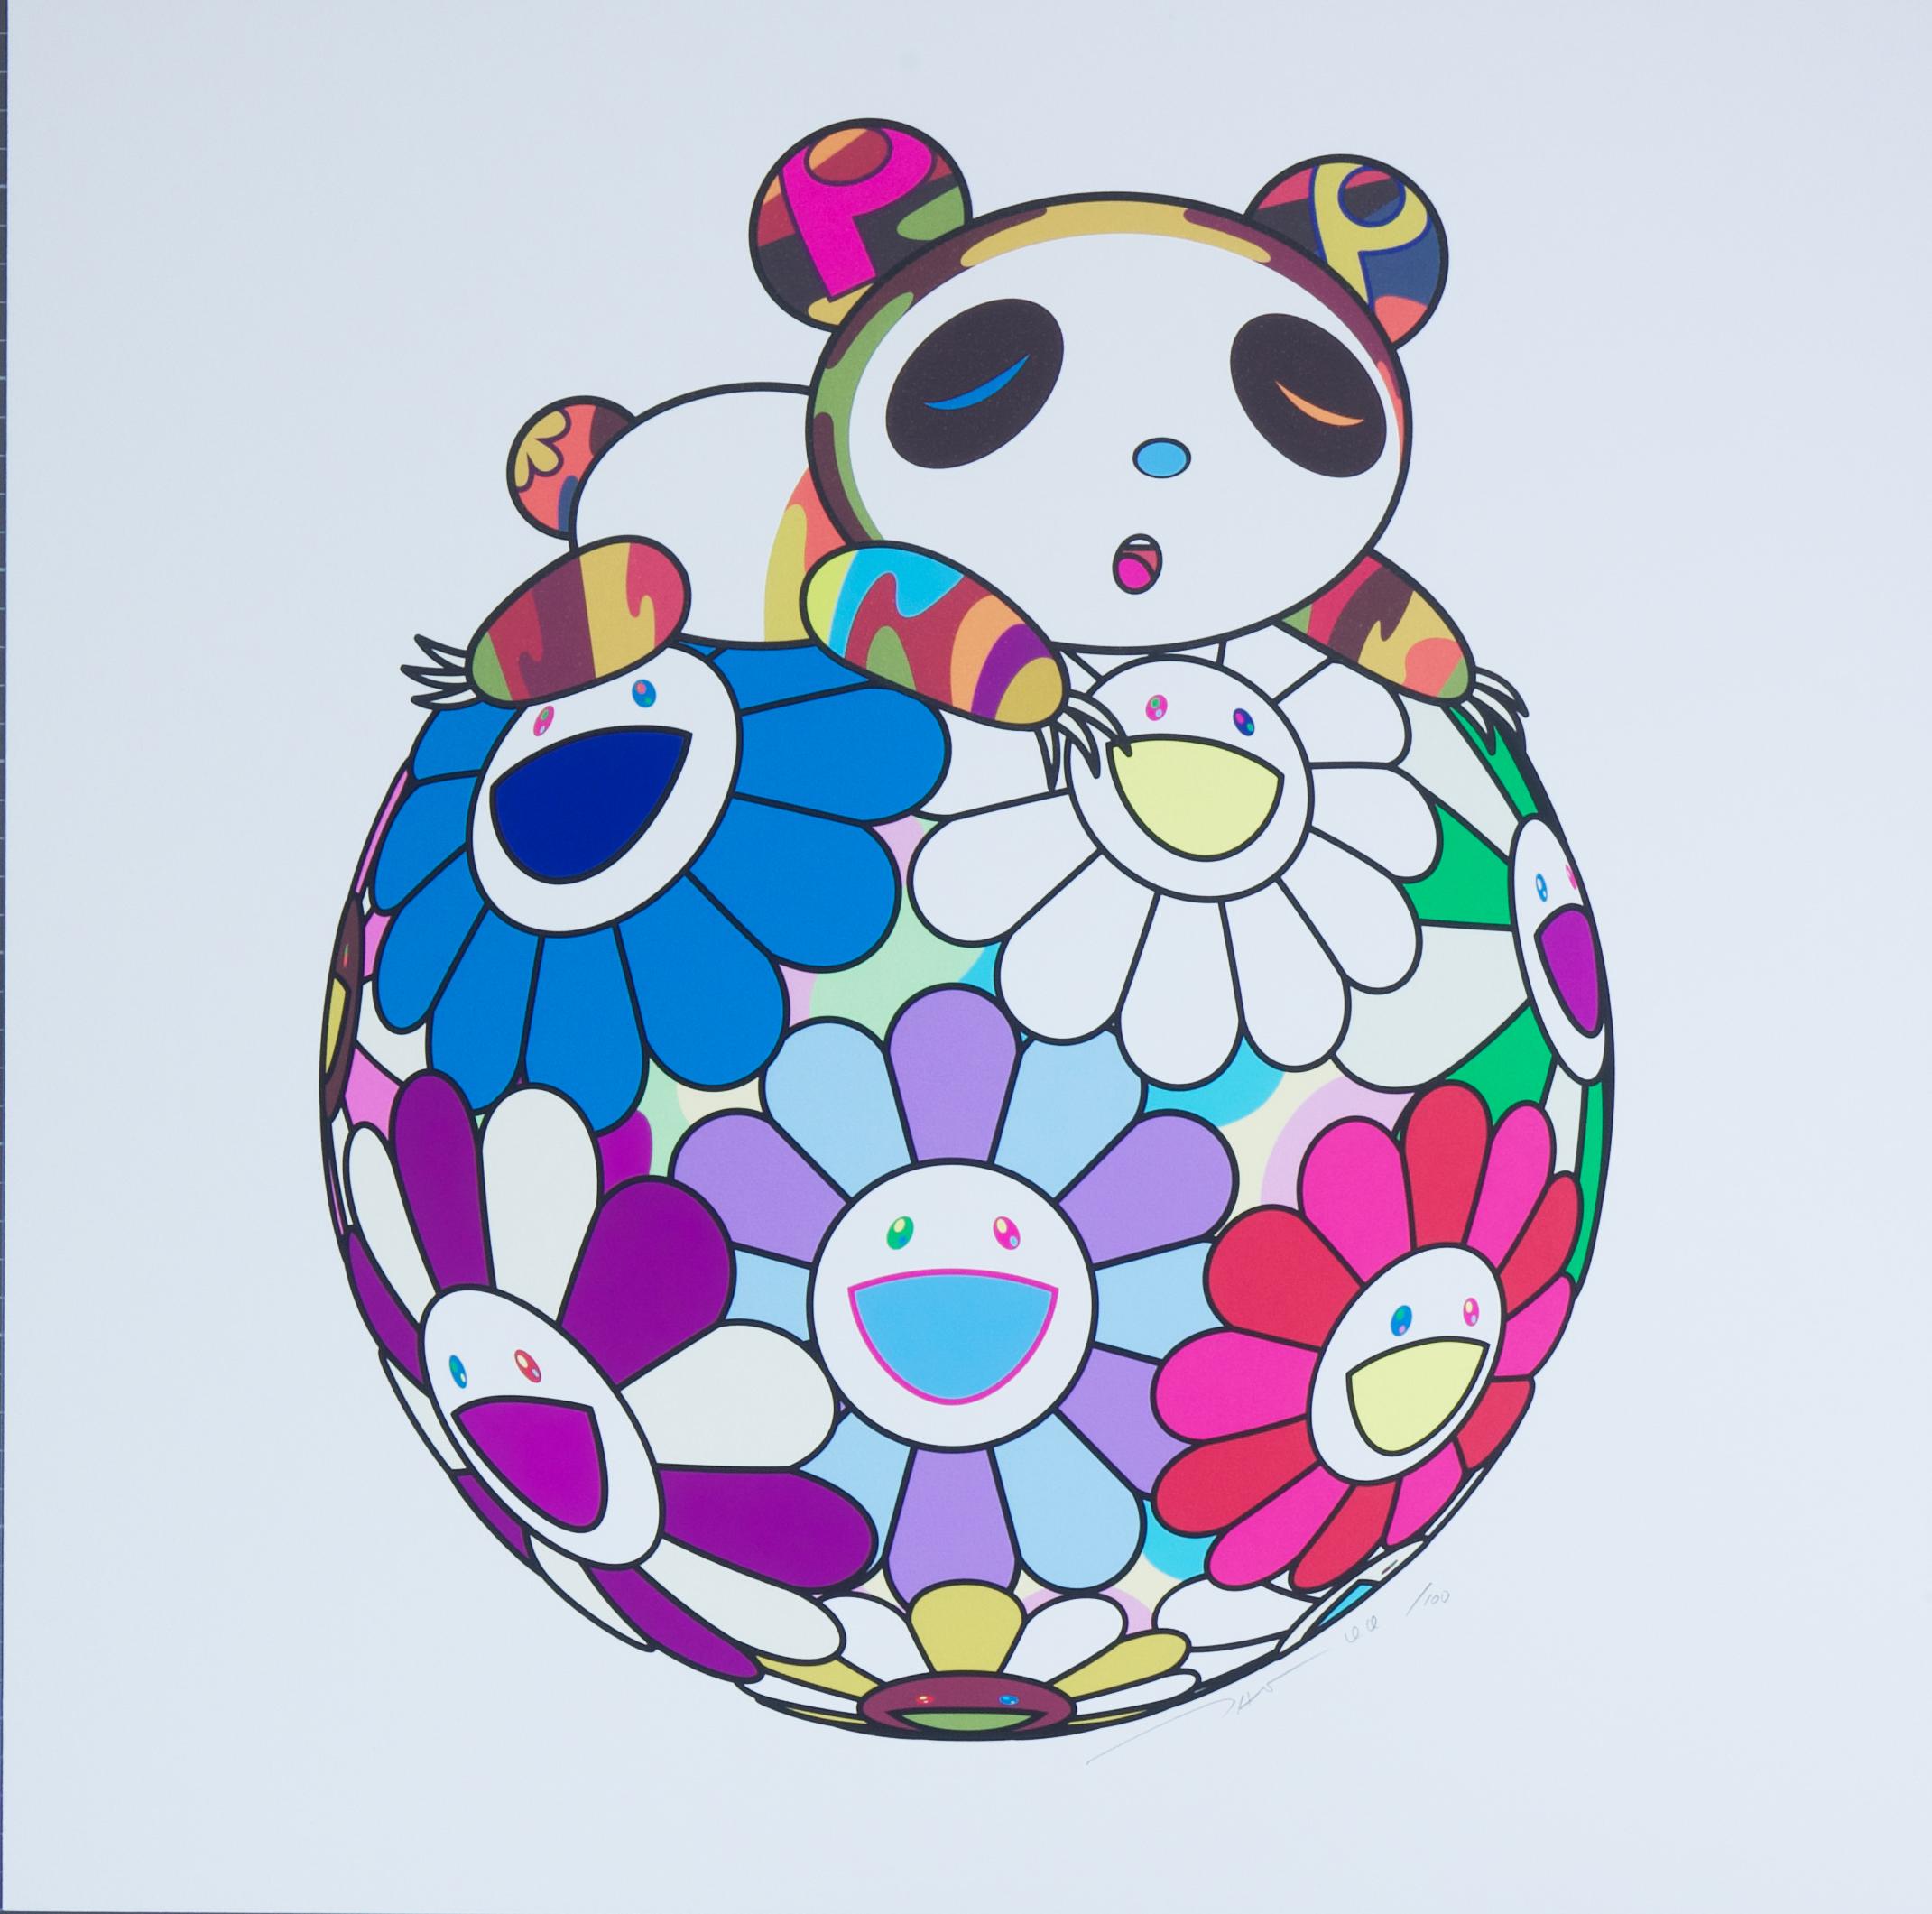 Atop a Ball of Flowers, a Panda Cub Sleeps Soundly  - Print by Takashi Murakami